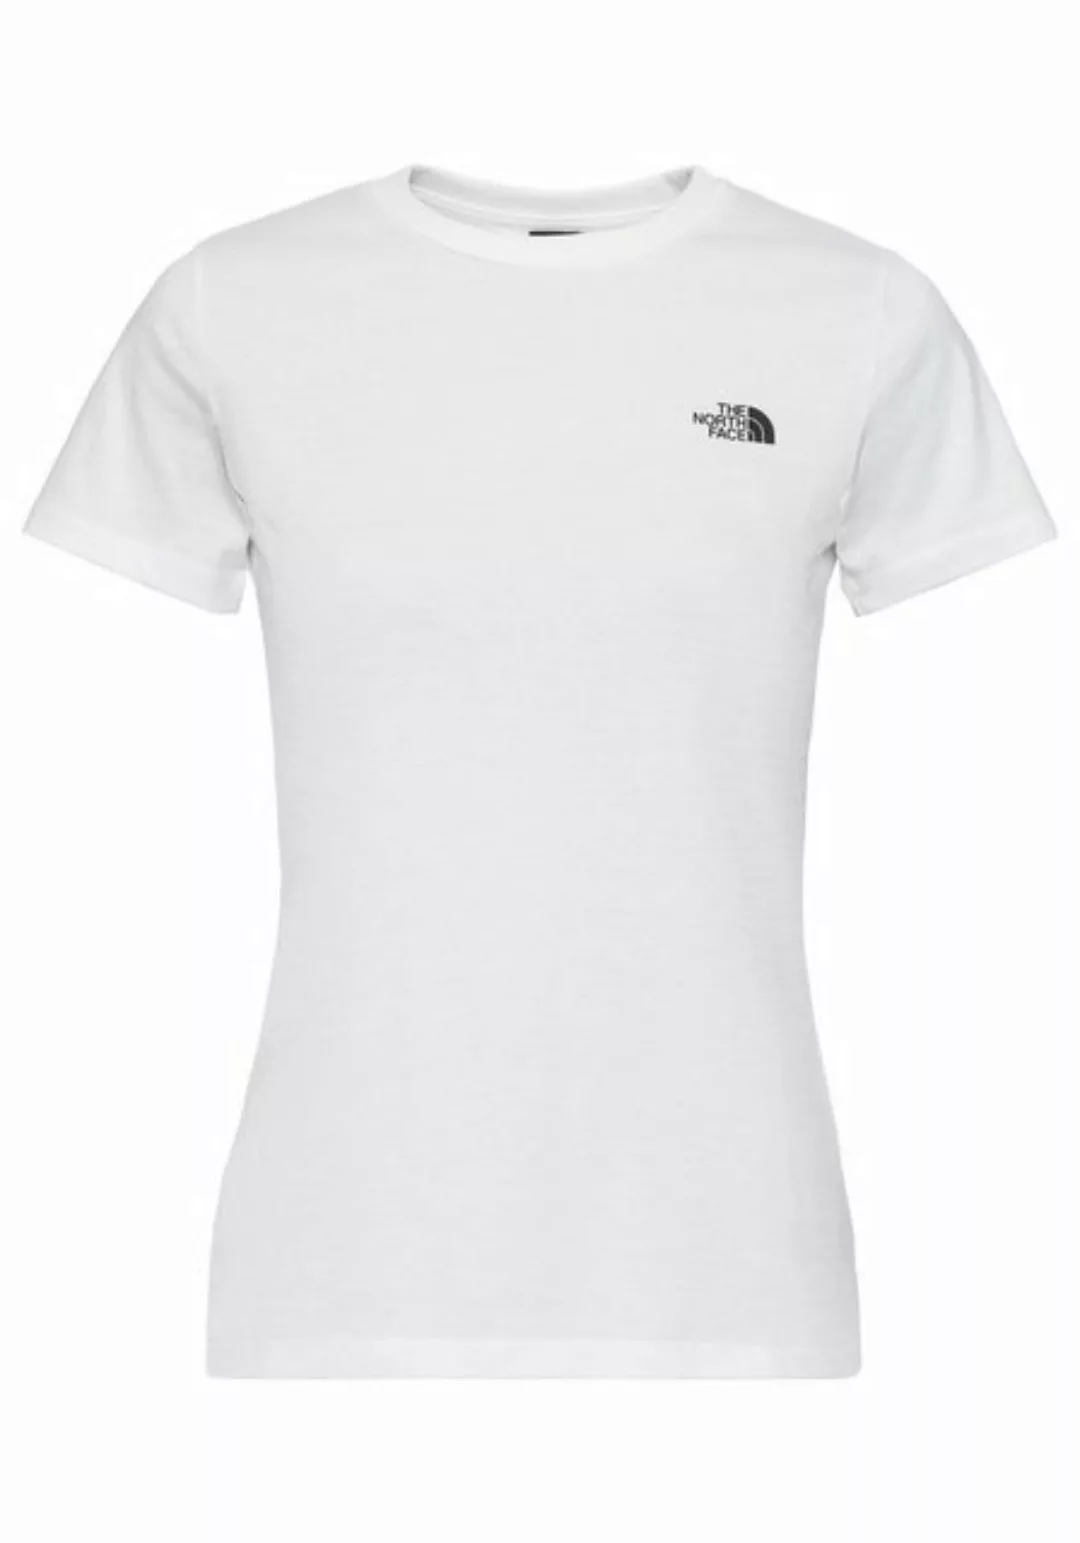 The North Face T-Shirt W S/S SIMPLE DOME TEE günstig online kaufen